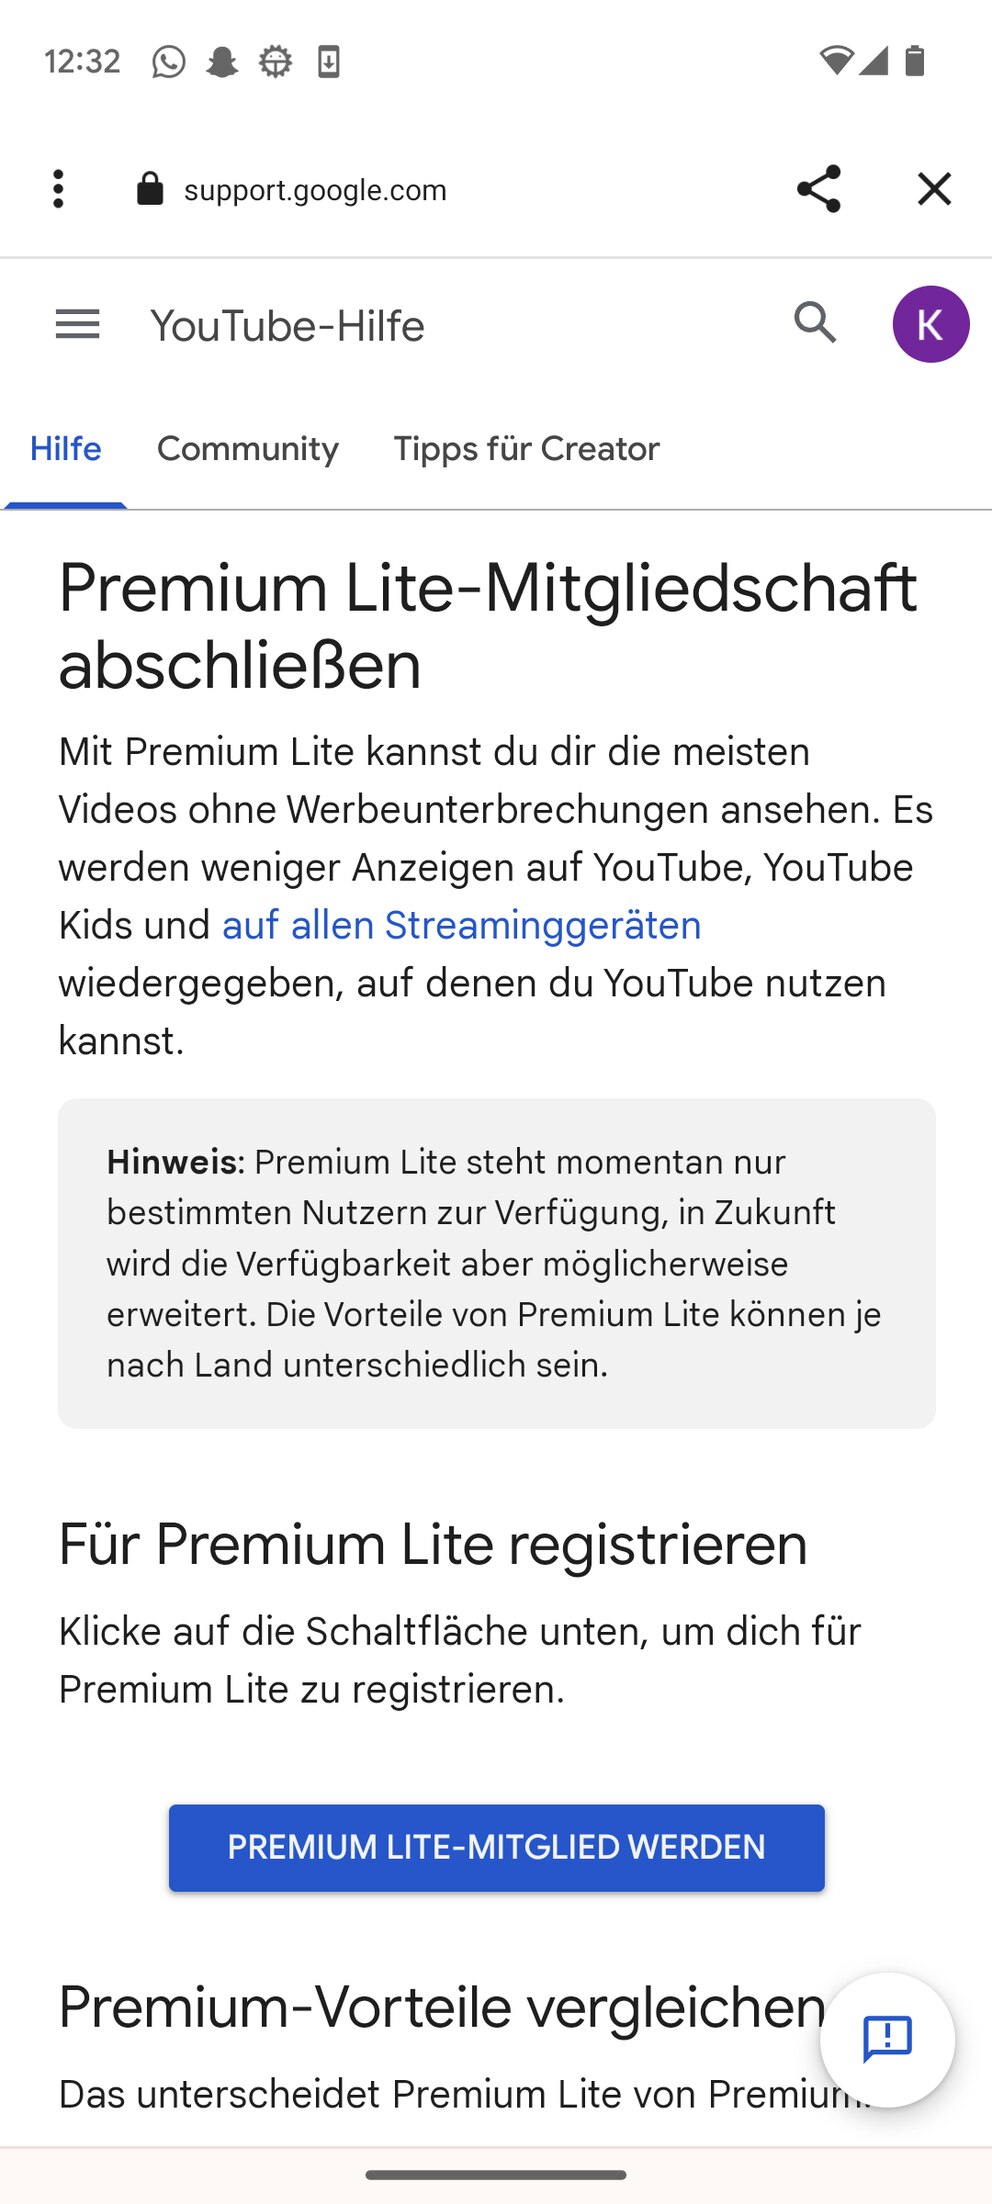 YouTube Premium Lite bu Android telefonda sunulmuyor